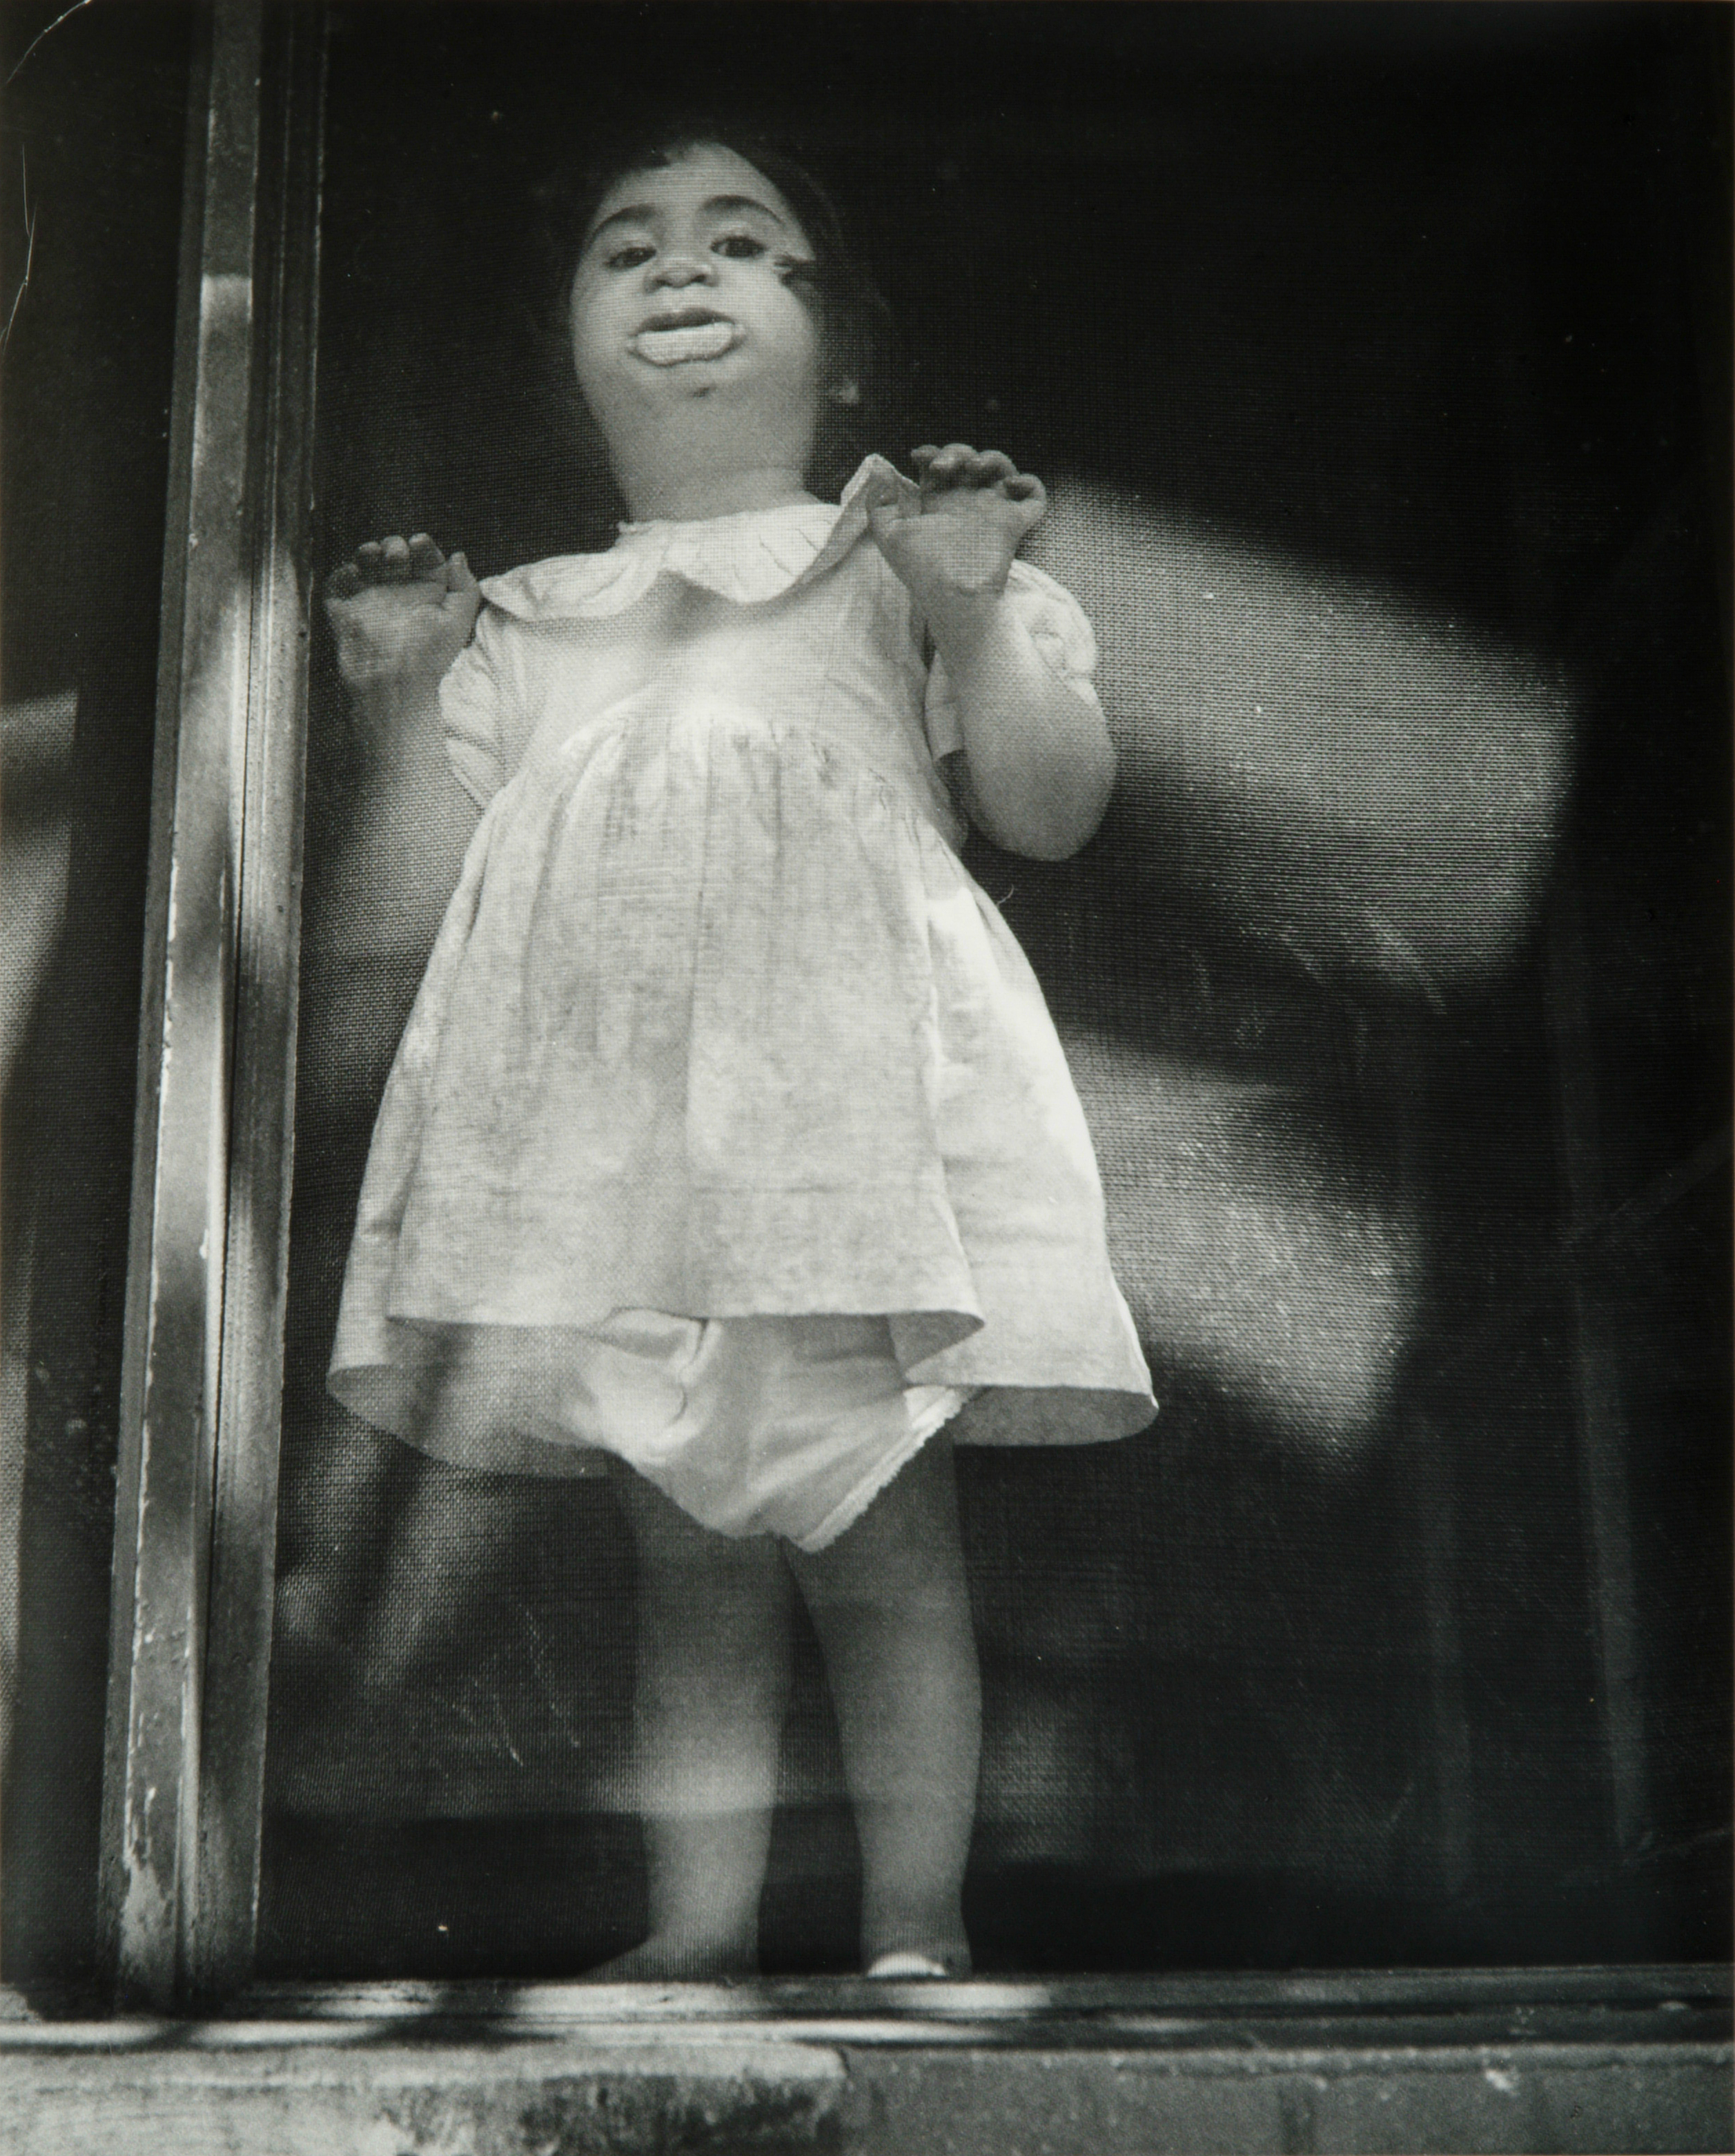 The Screen, Child in Window, Lower East Side